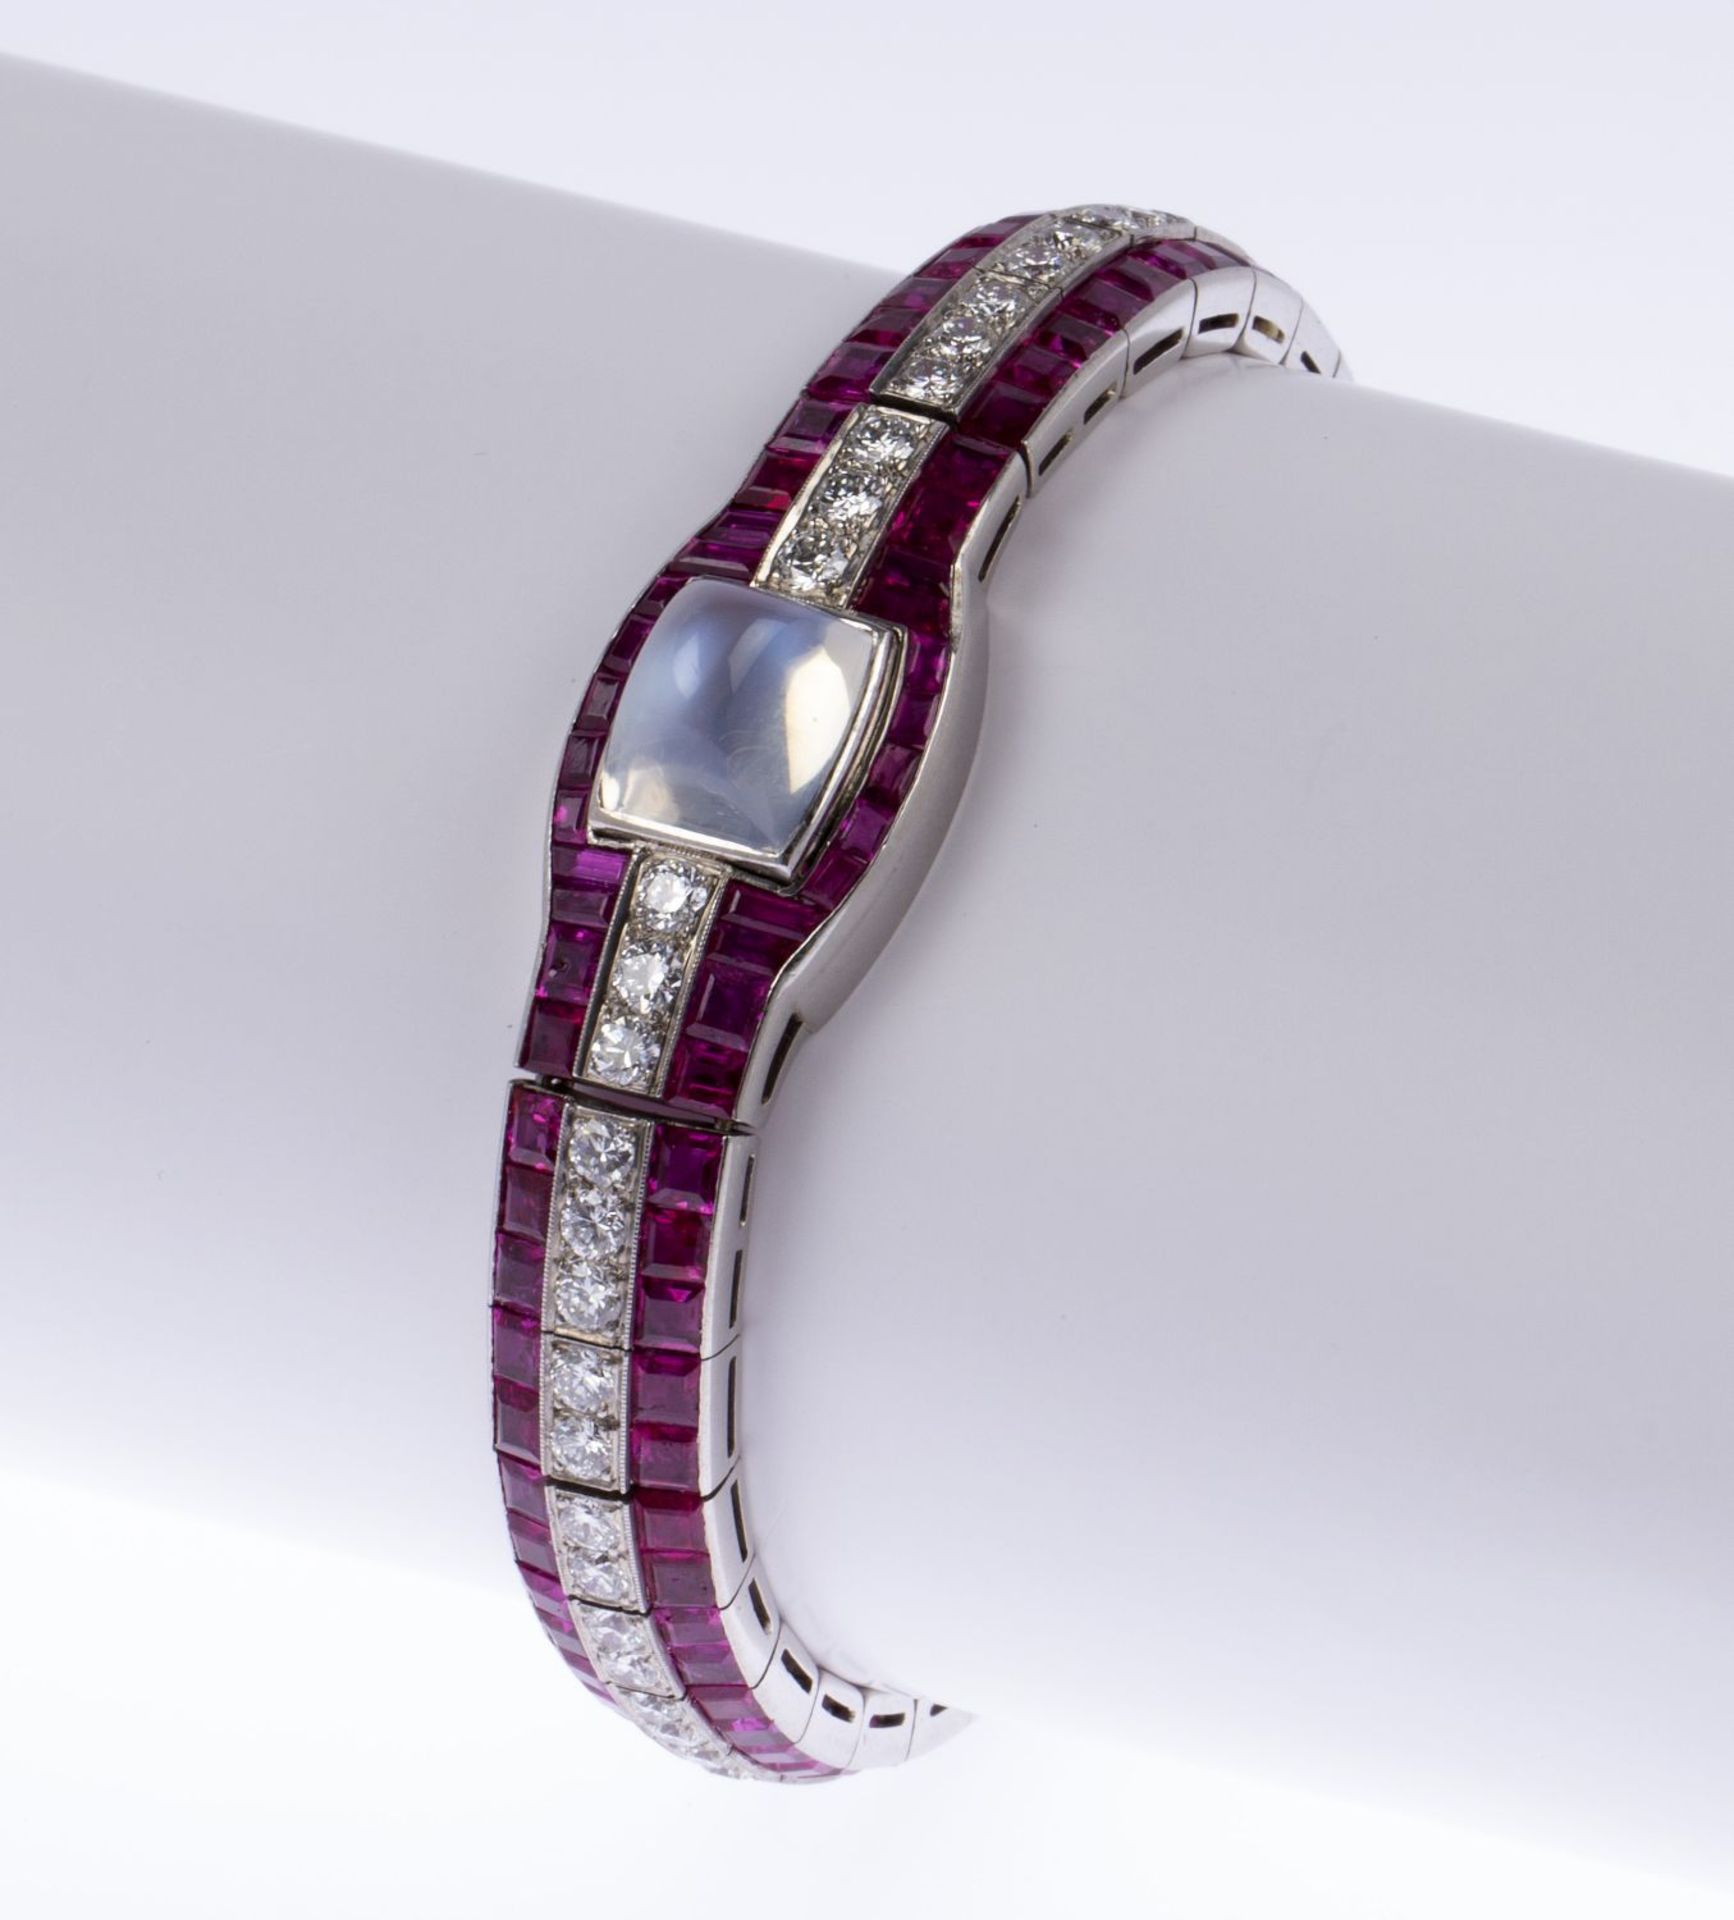 Feines Rubin-Brillant-Armband mit - Image 2 of 5